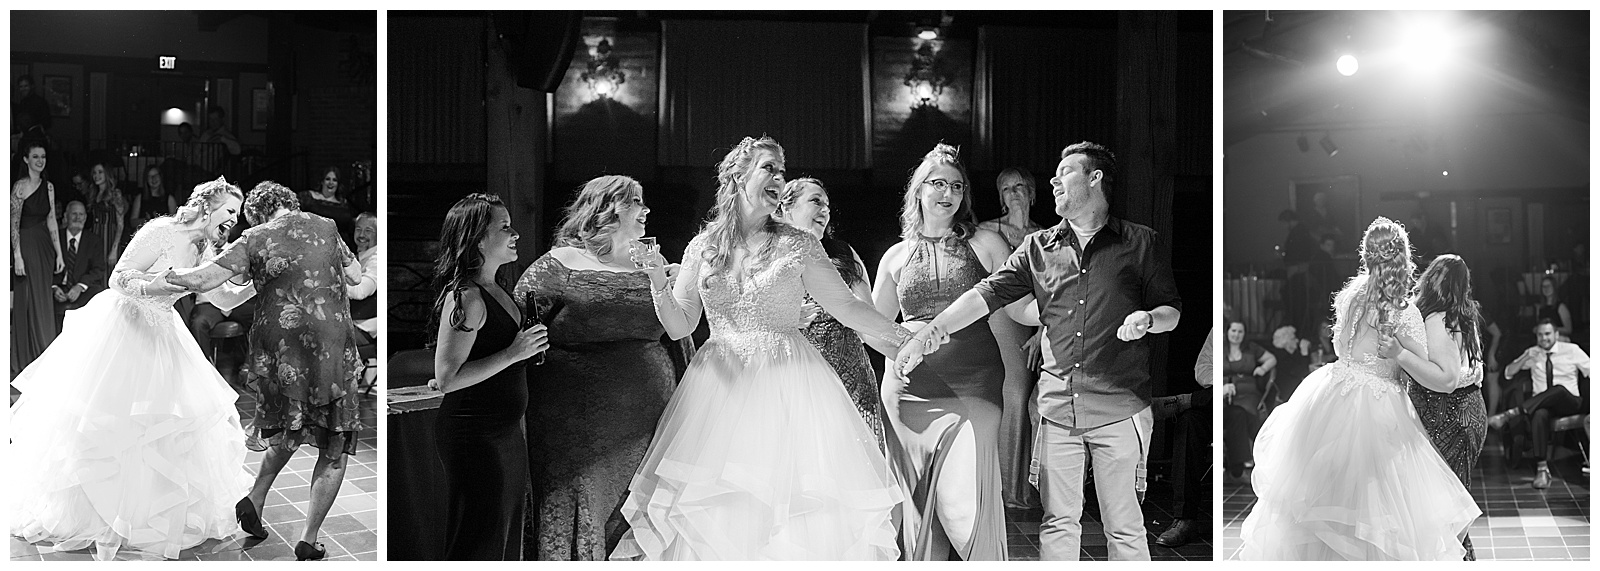 Family Wedding Photos | The Shot List | Stephen & Melissa Photography